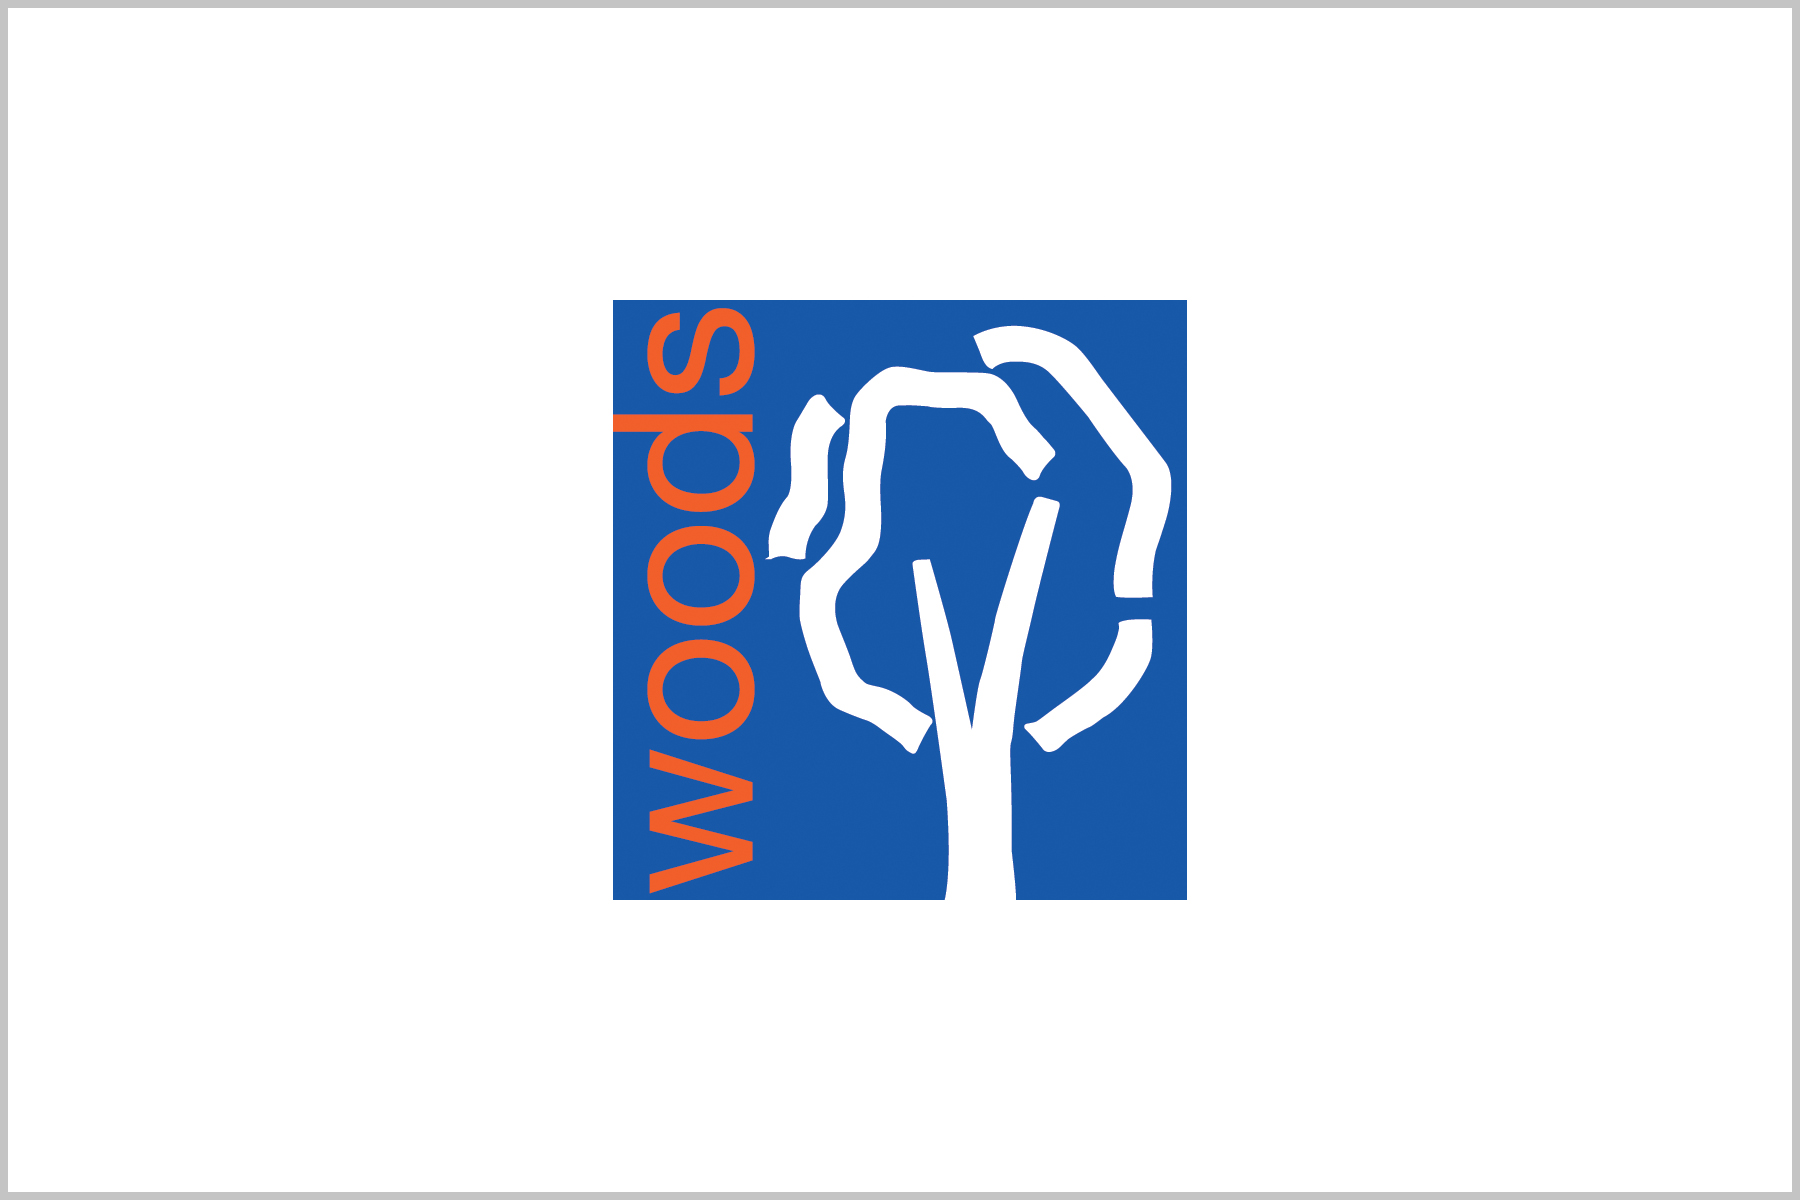 Woods logo